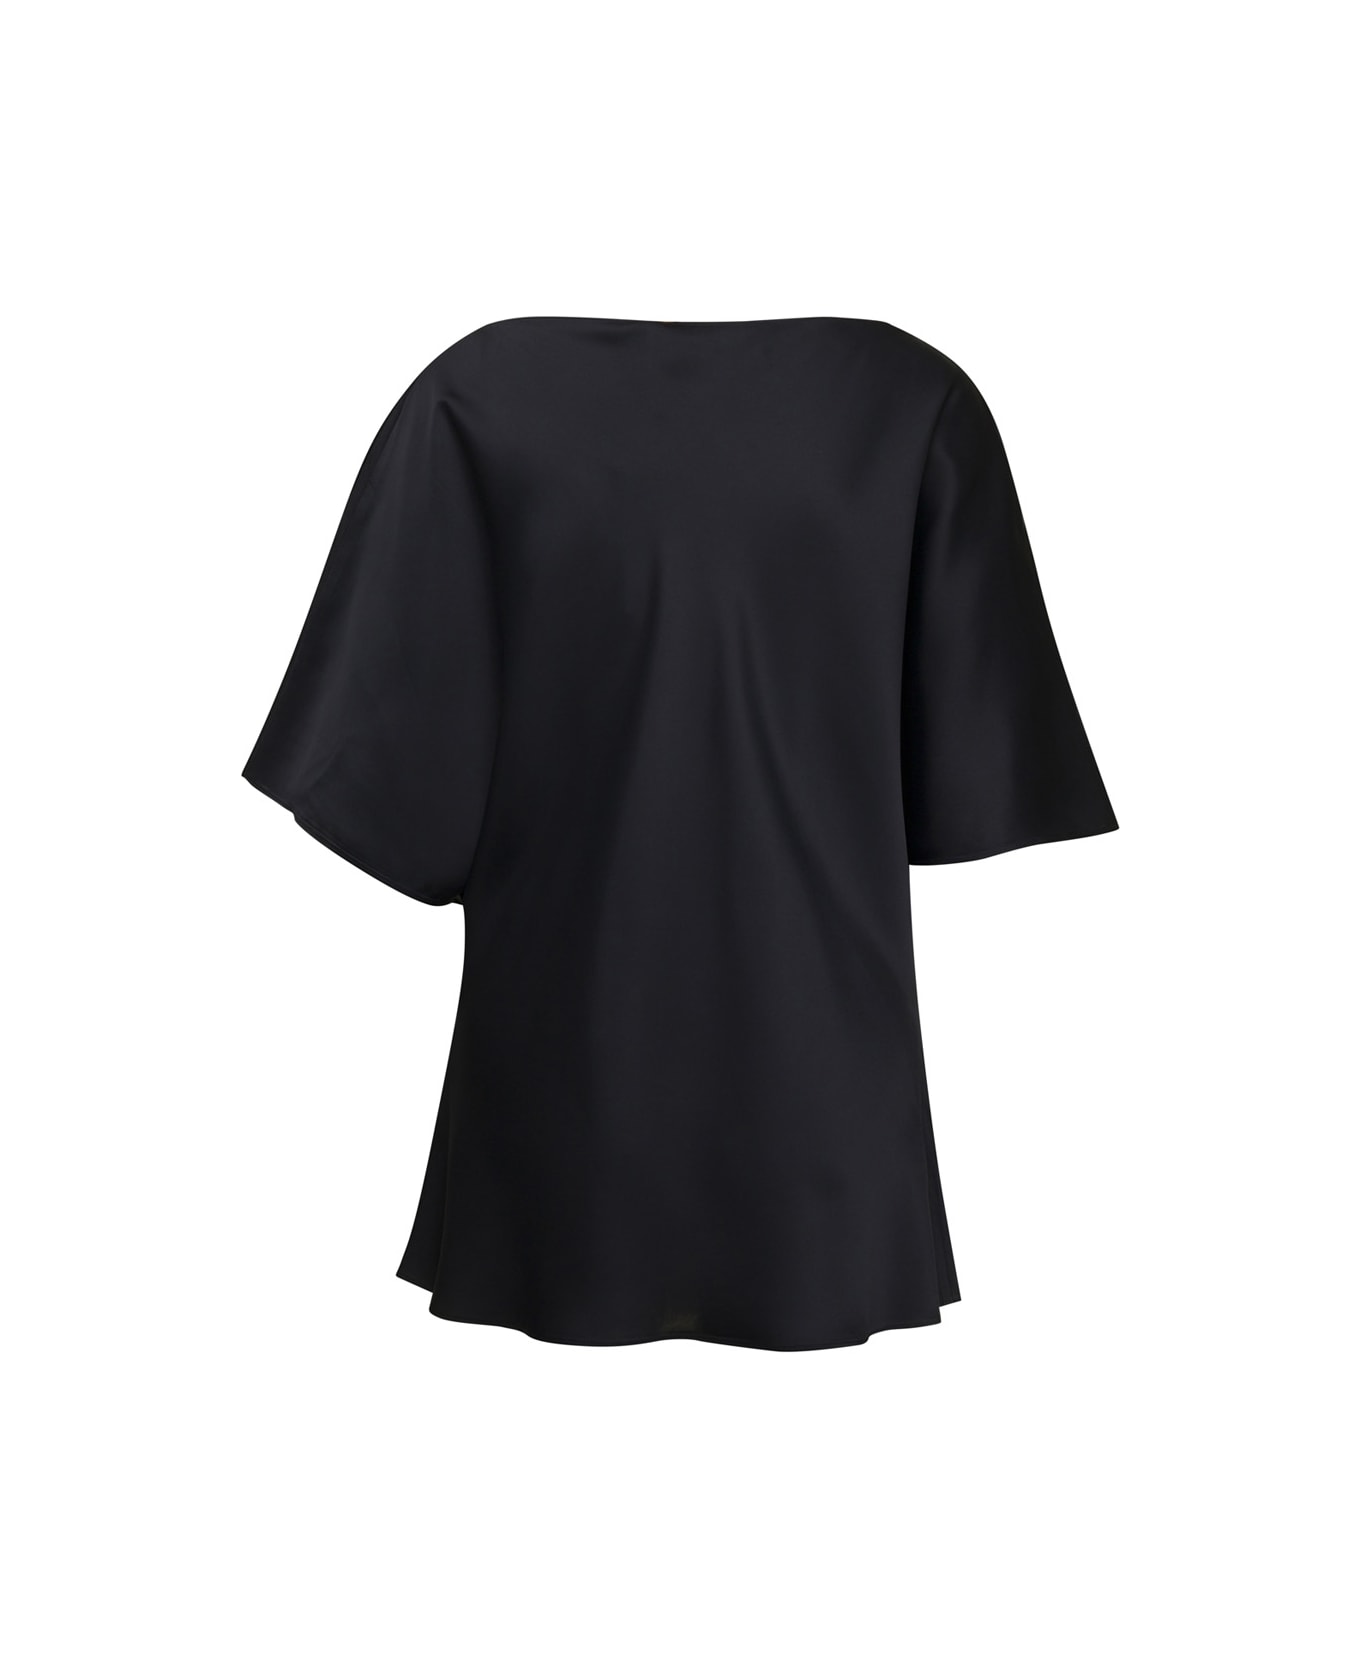 Róhe Black Shirt With Boat Neckline In Viscose Woman - Black シャツ